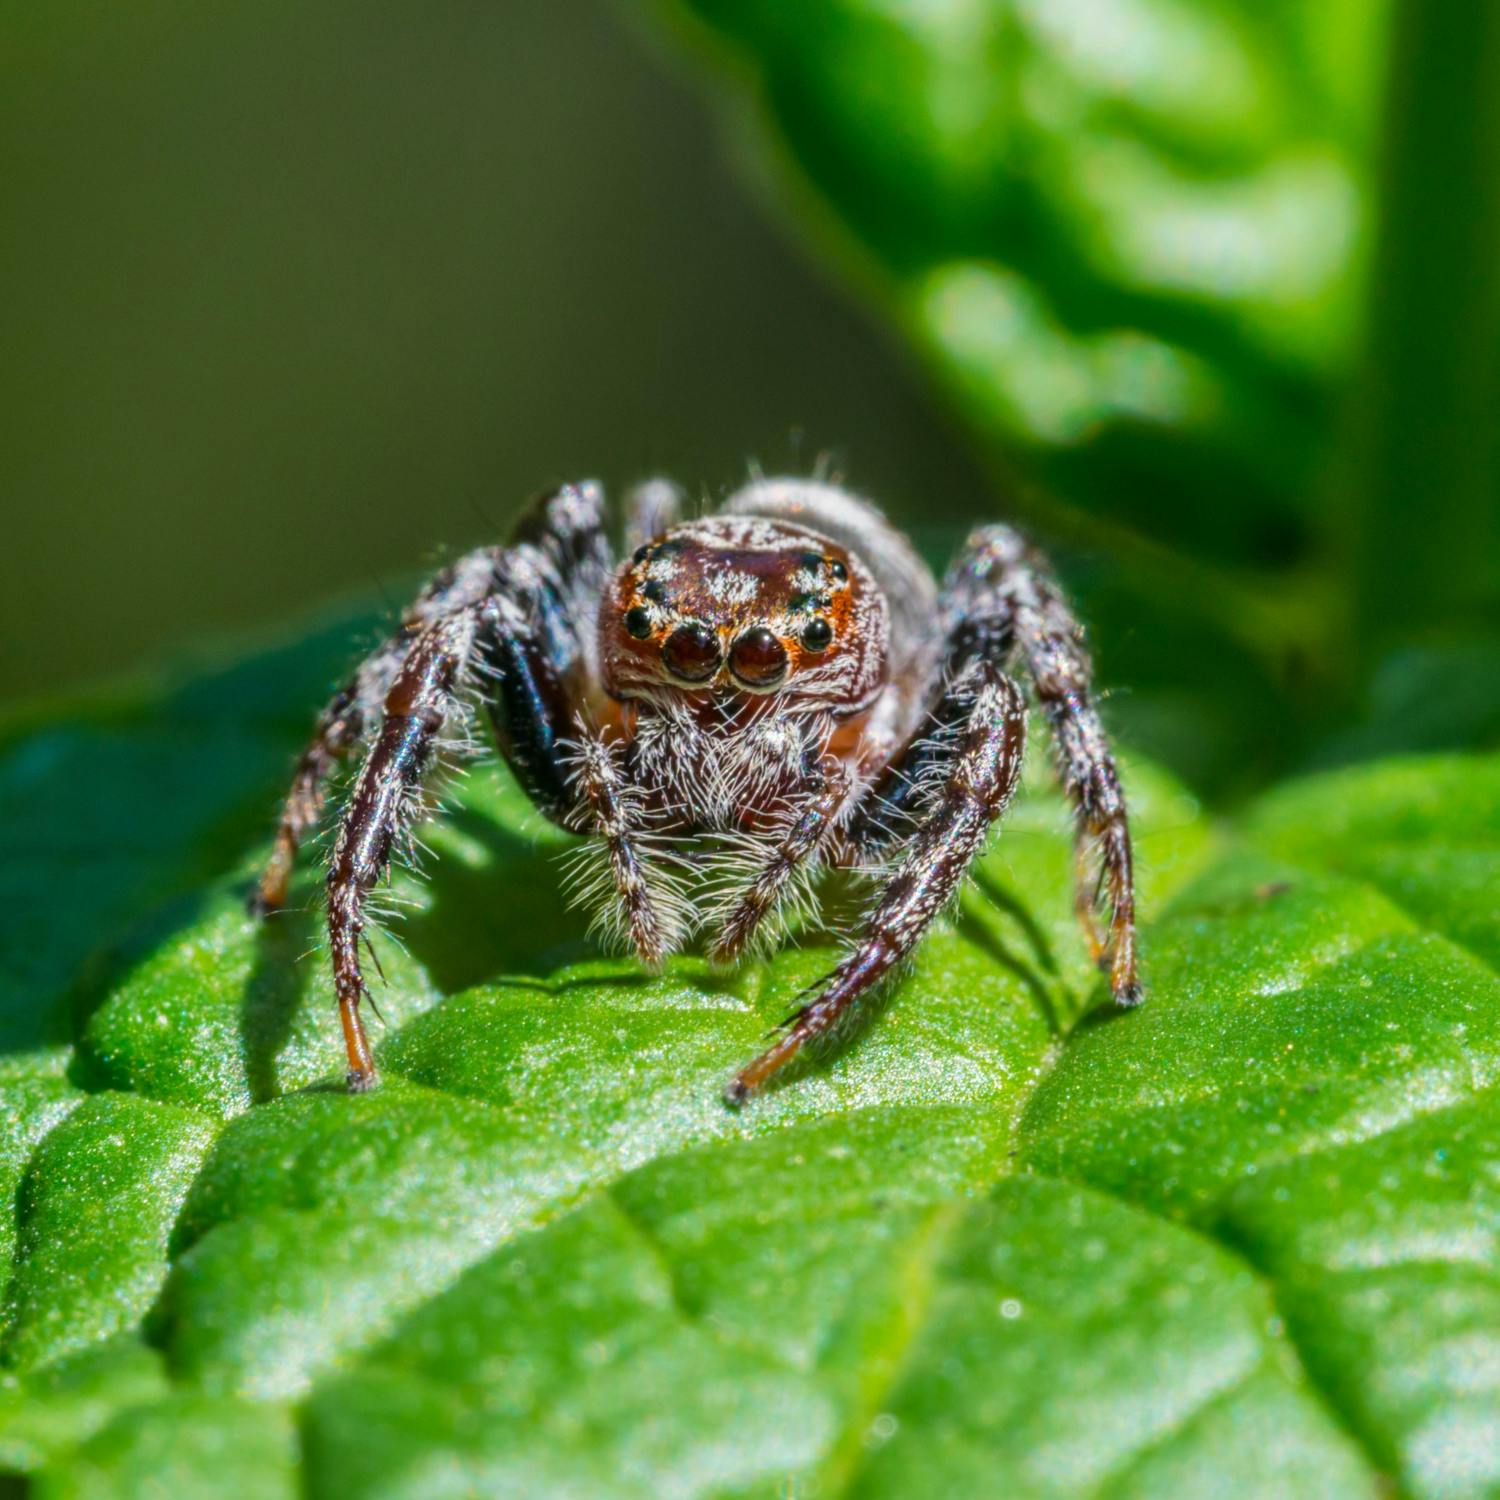 Australian Spider Expert Has Some Advice For Arachnophobes